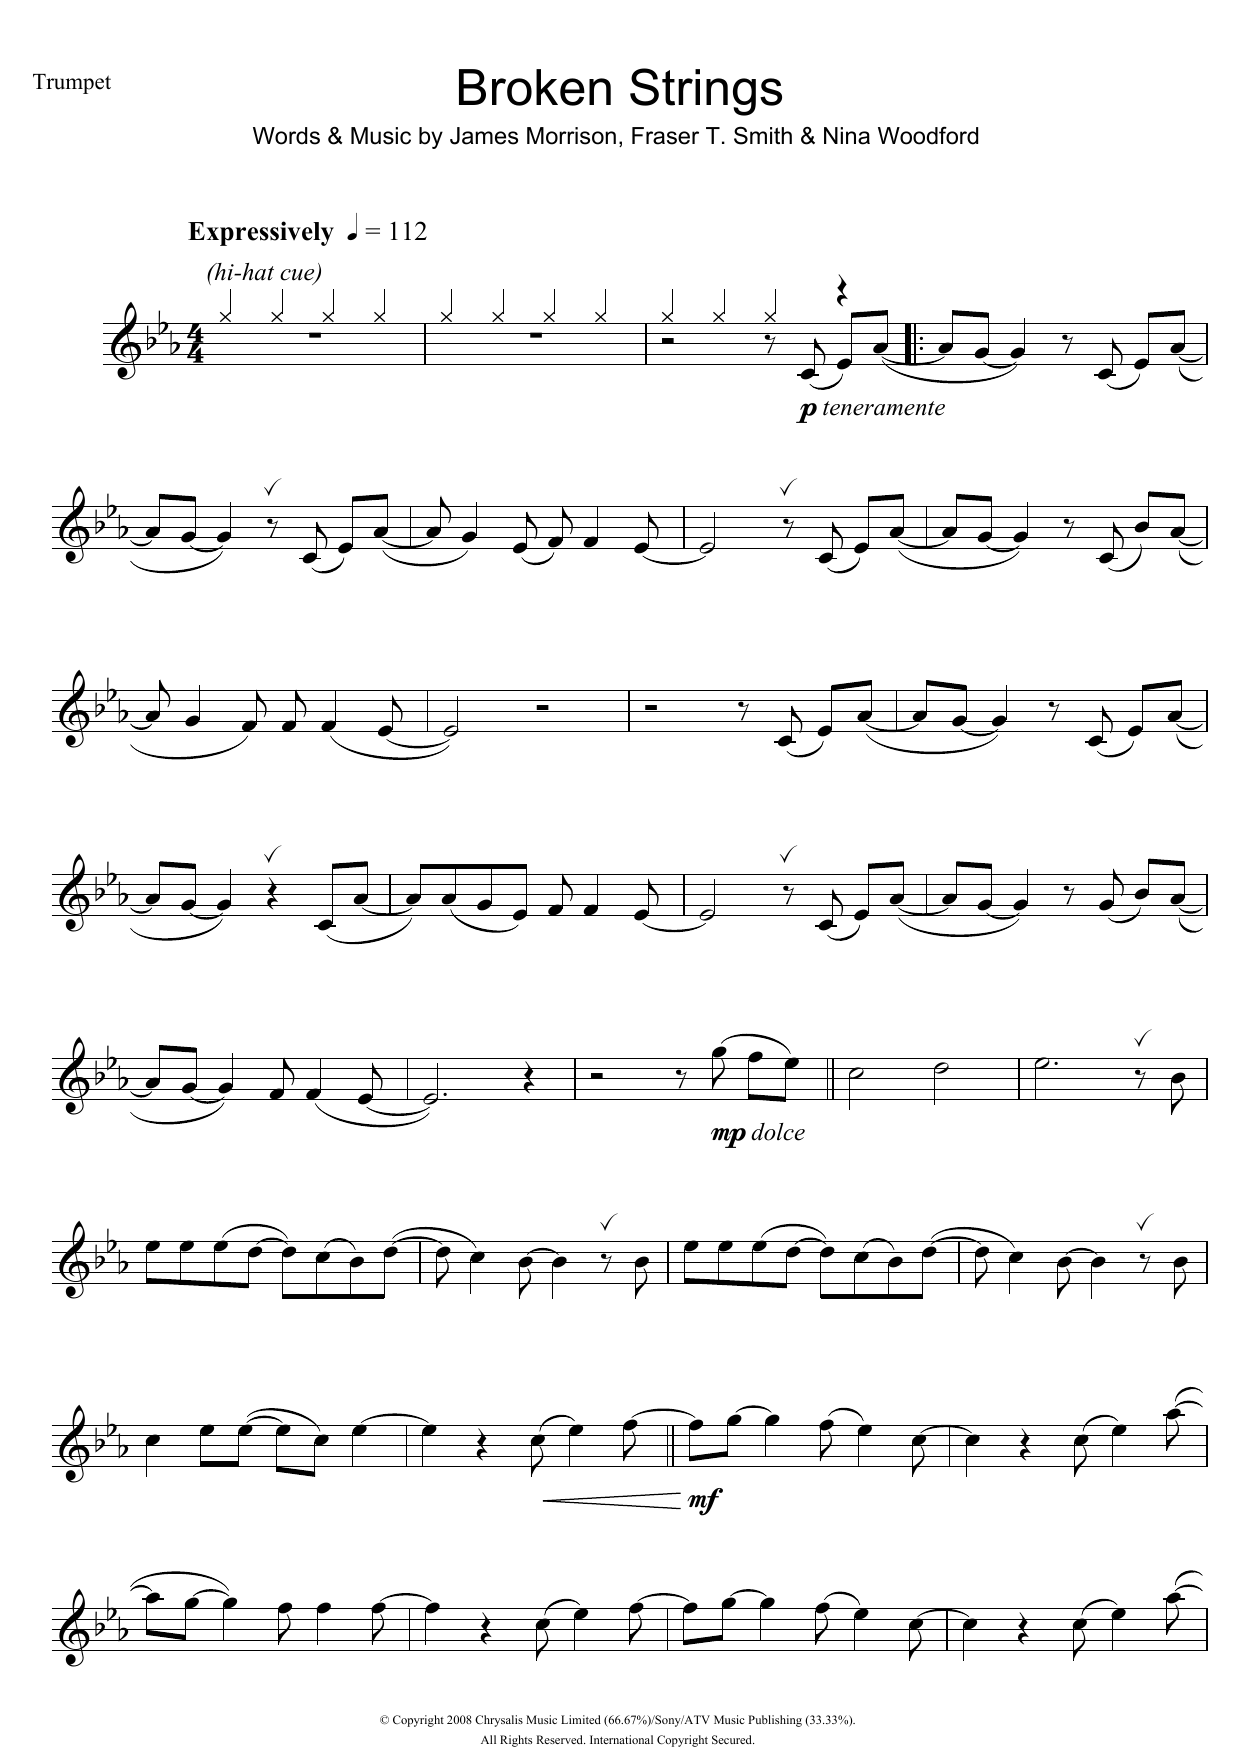 James Morrison Broken Strings Sheet Music Notes & Chords for Trumpet - Download or Print PDF